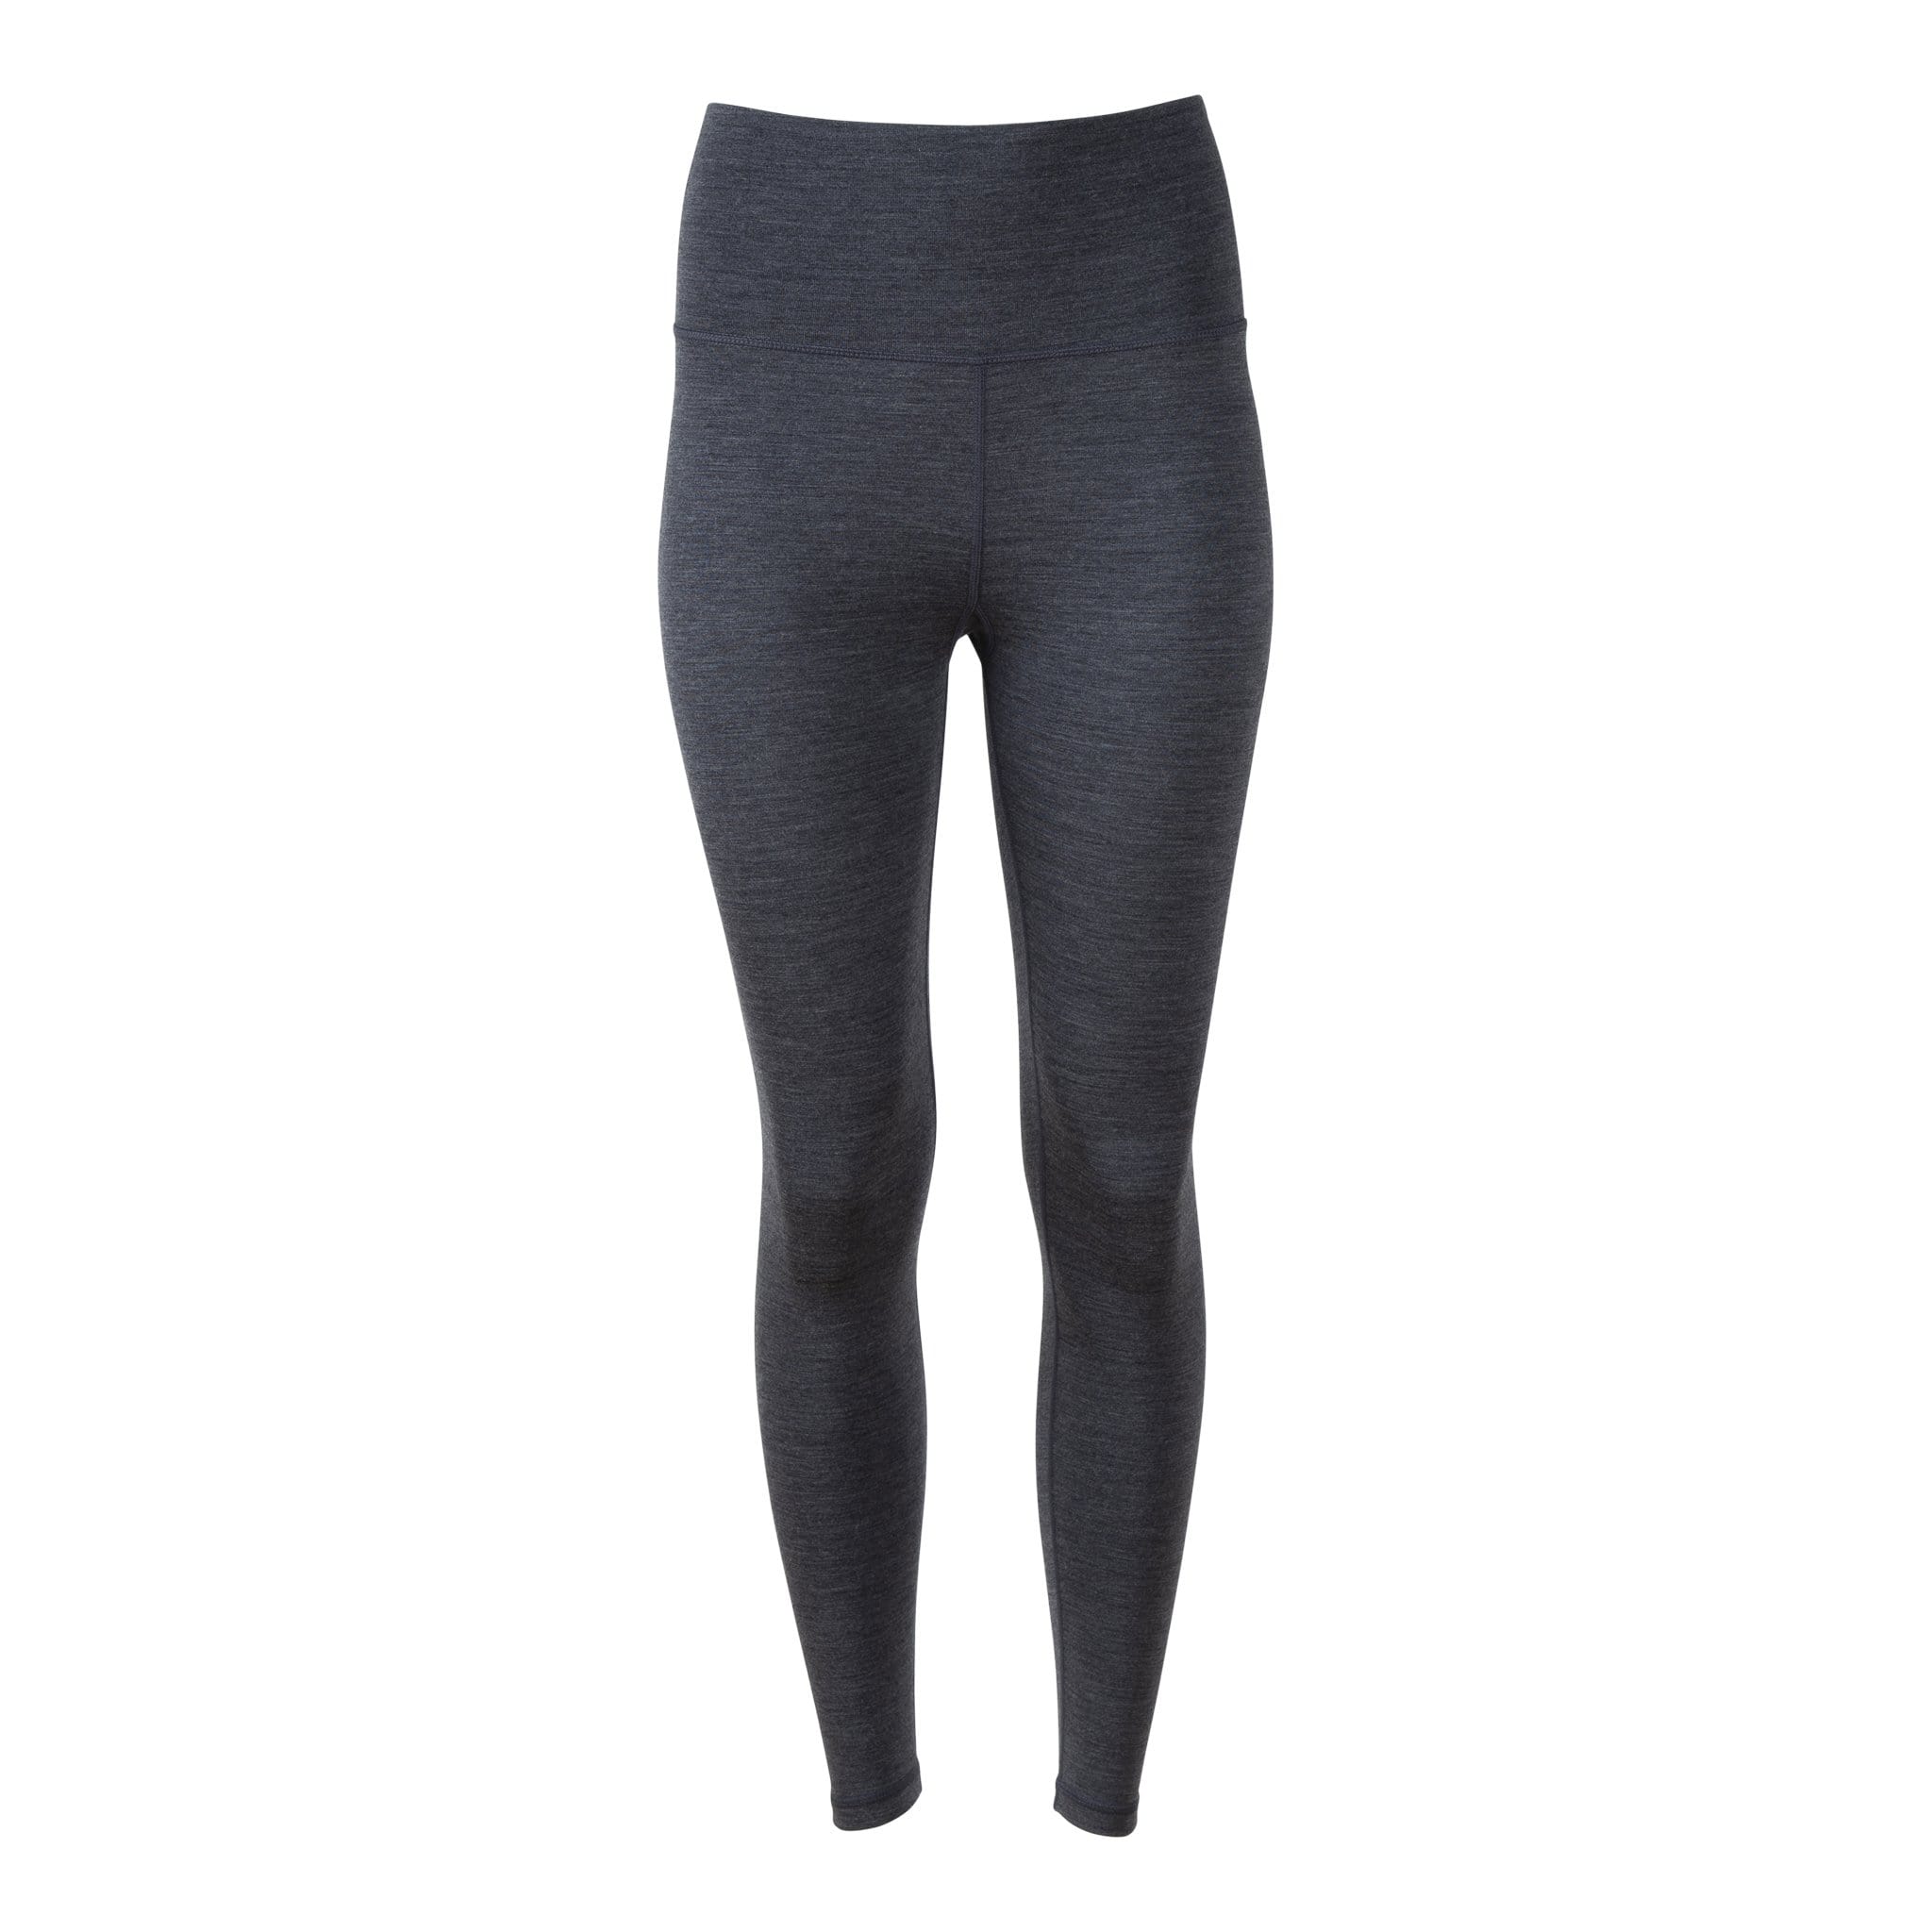  Merino Wool Base Layer Women Pants 100% Merino Wool Leggings  Lightweight Thermal Underwear Bottoms + Merino Wool Socks